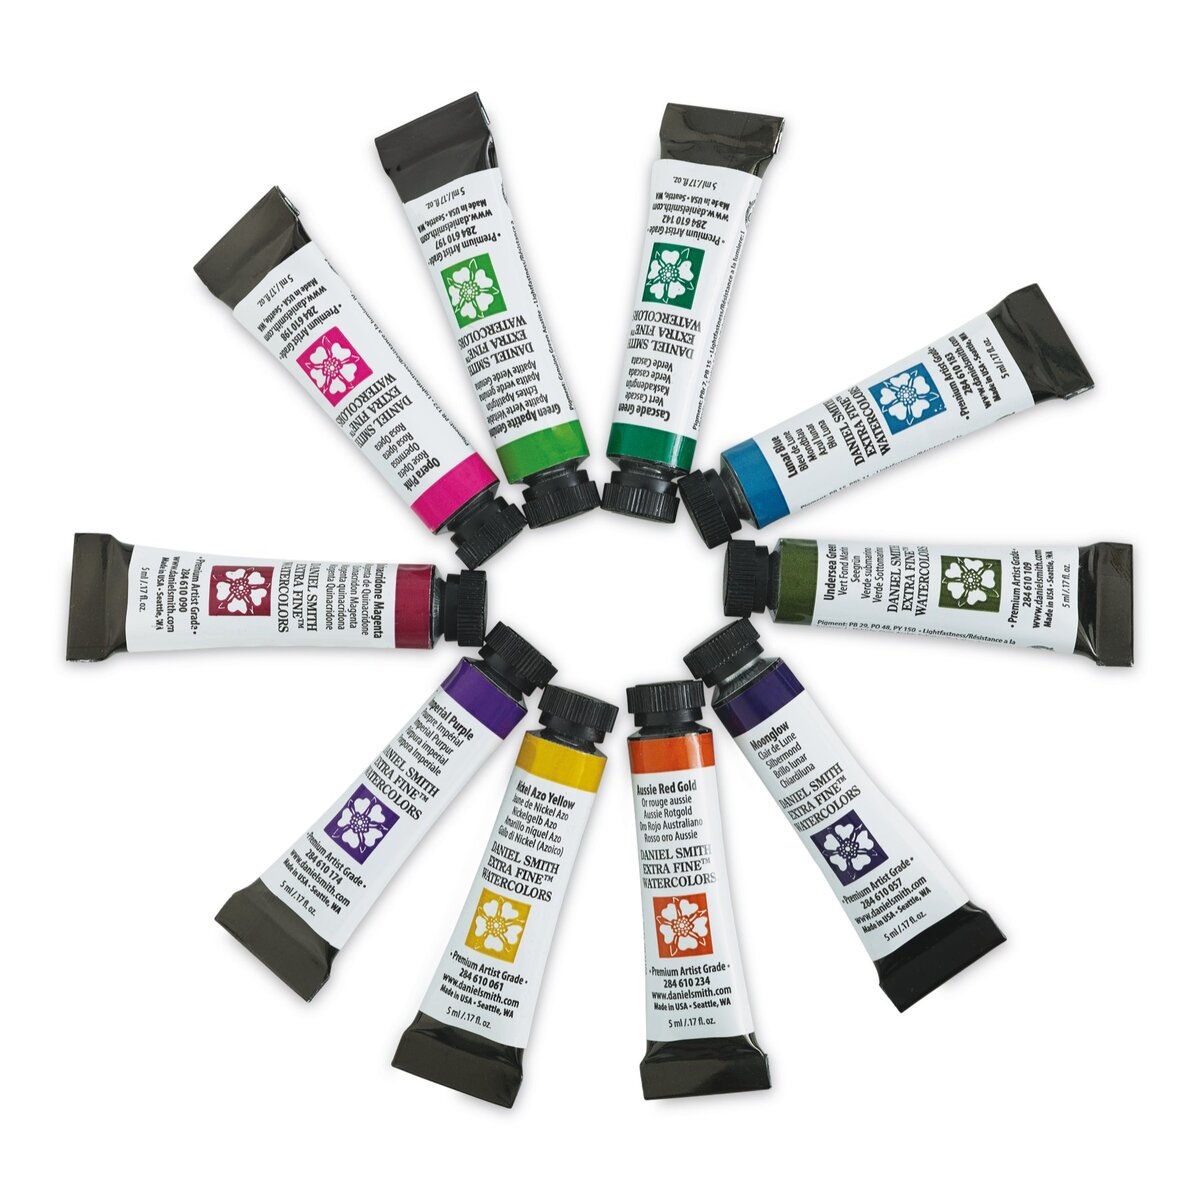 DANIEL SMITH Watercolor, 5ml tubes, Jean Haines Master Artist Set 10  Watercolor Tubes & Watercolor Set 5ml Tubes - Primatek Introductory  Watercolor